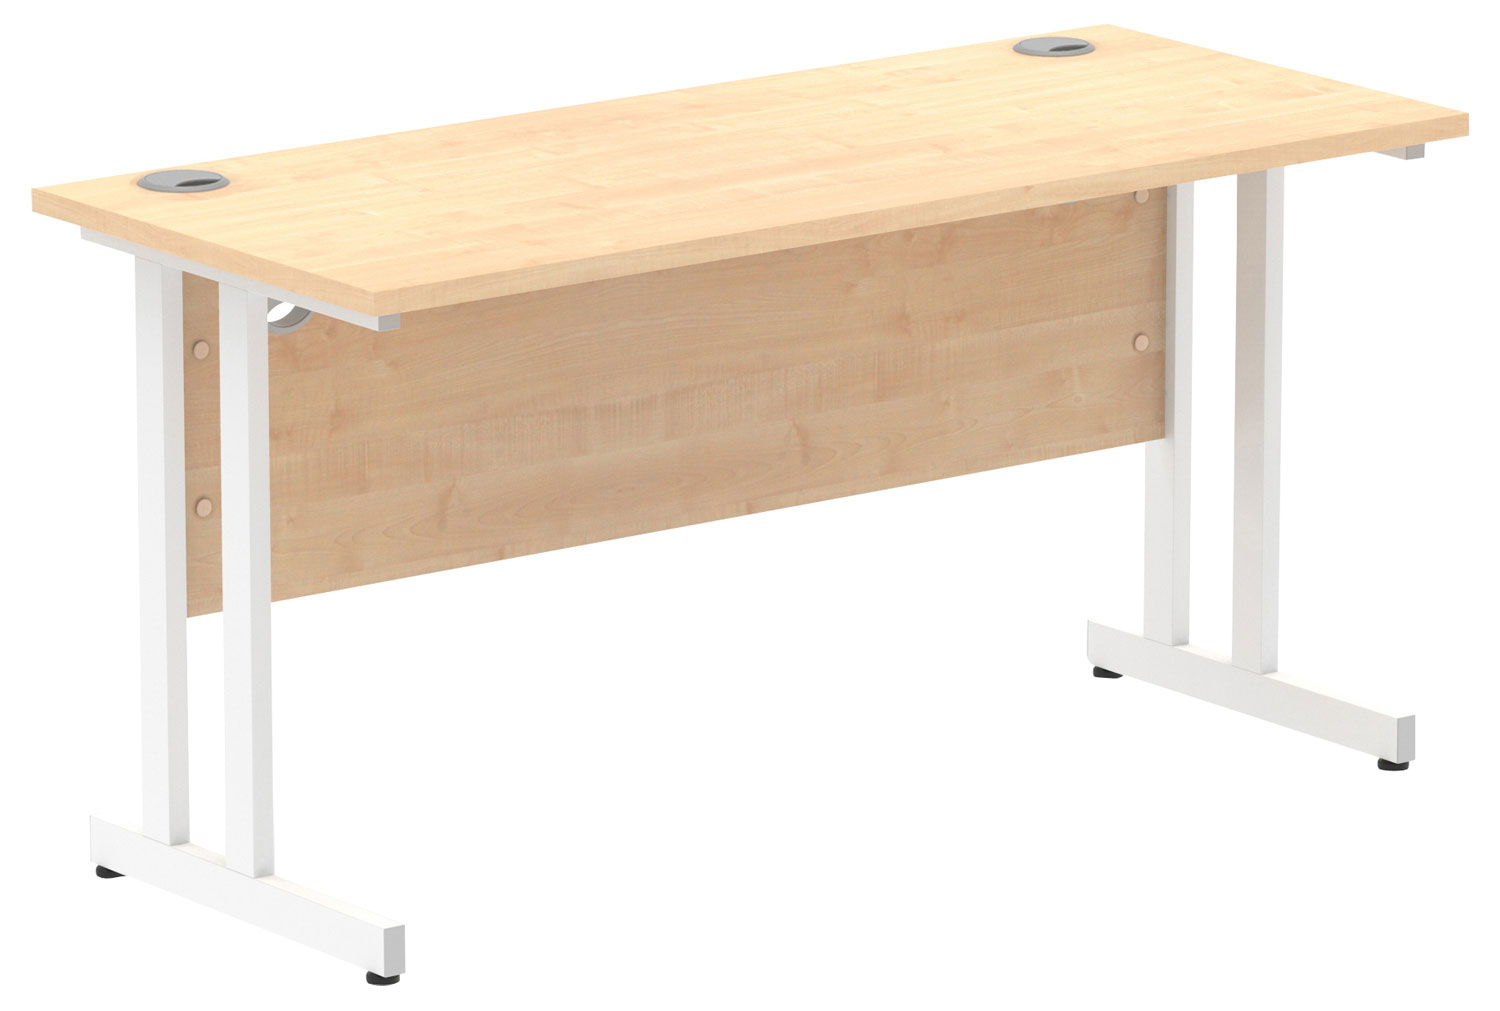 Vitali C-Leg Narrow Rectangular Office Desk (White Legs), 140wx60dx73h (cm), Maple, Express Delivery